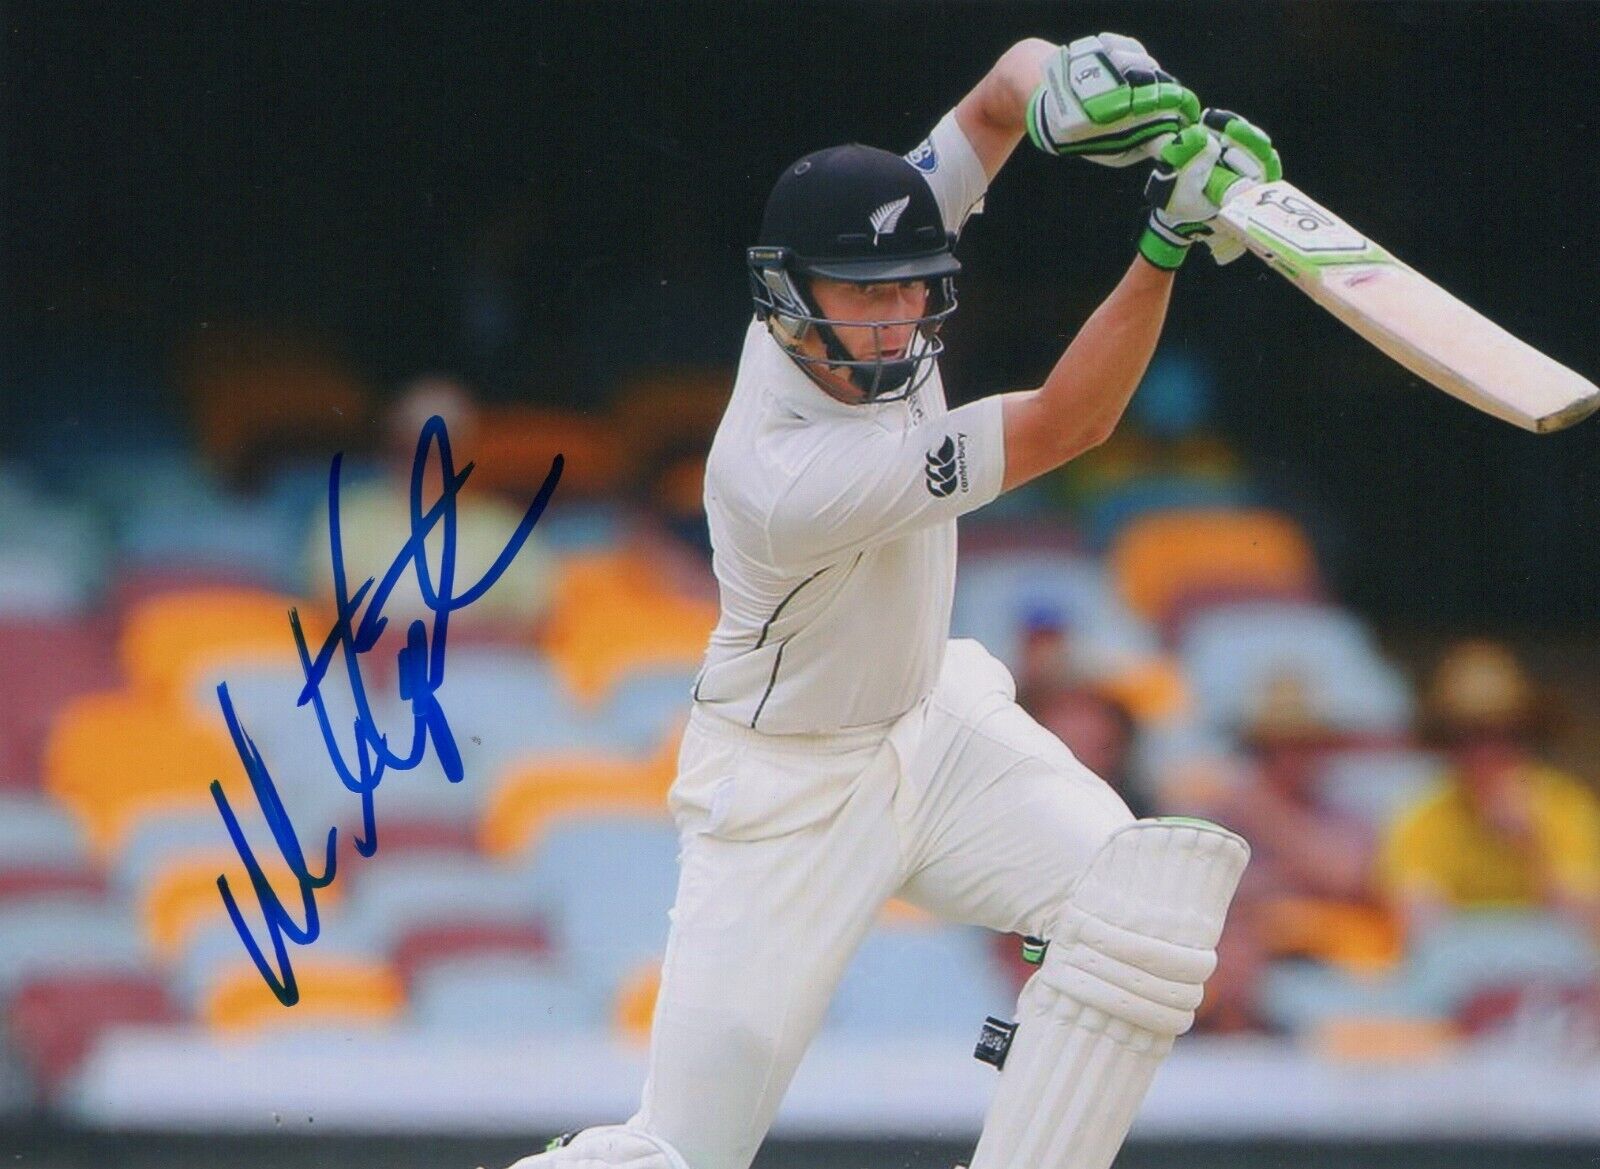 5x7 Original Autographed Photo of New Zealand Cricketer Martin Guptill